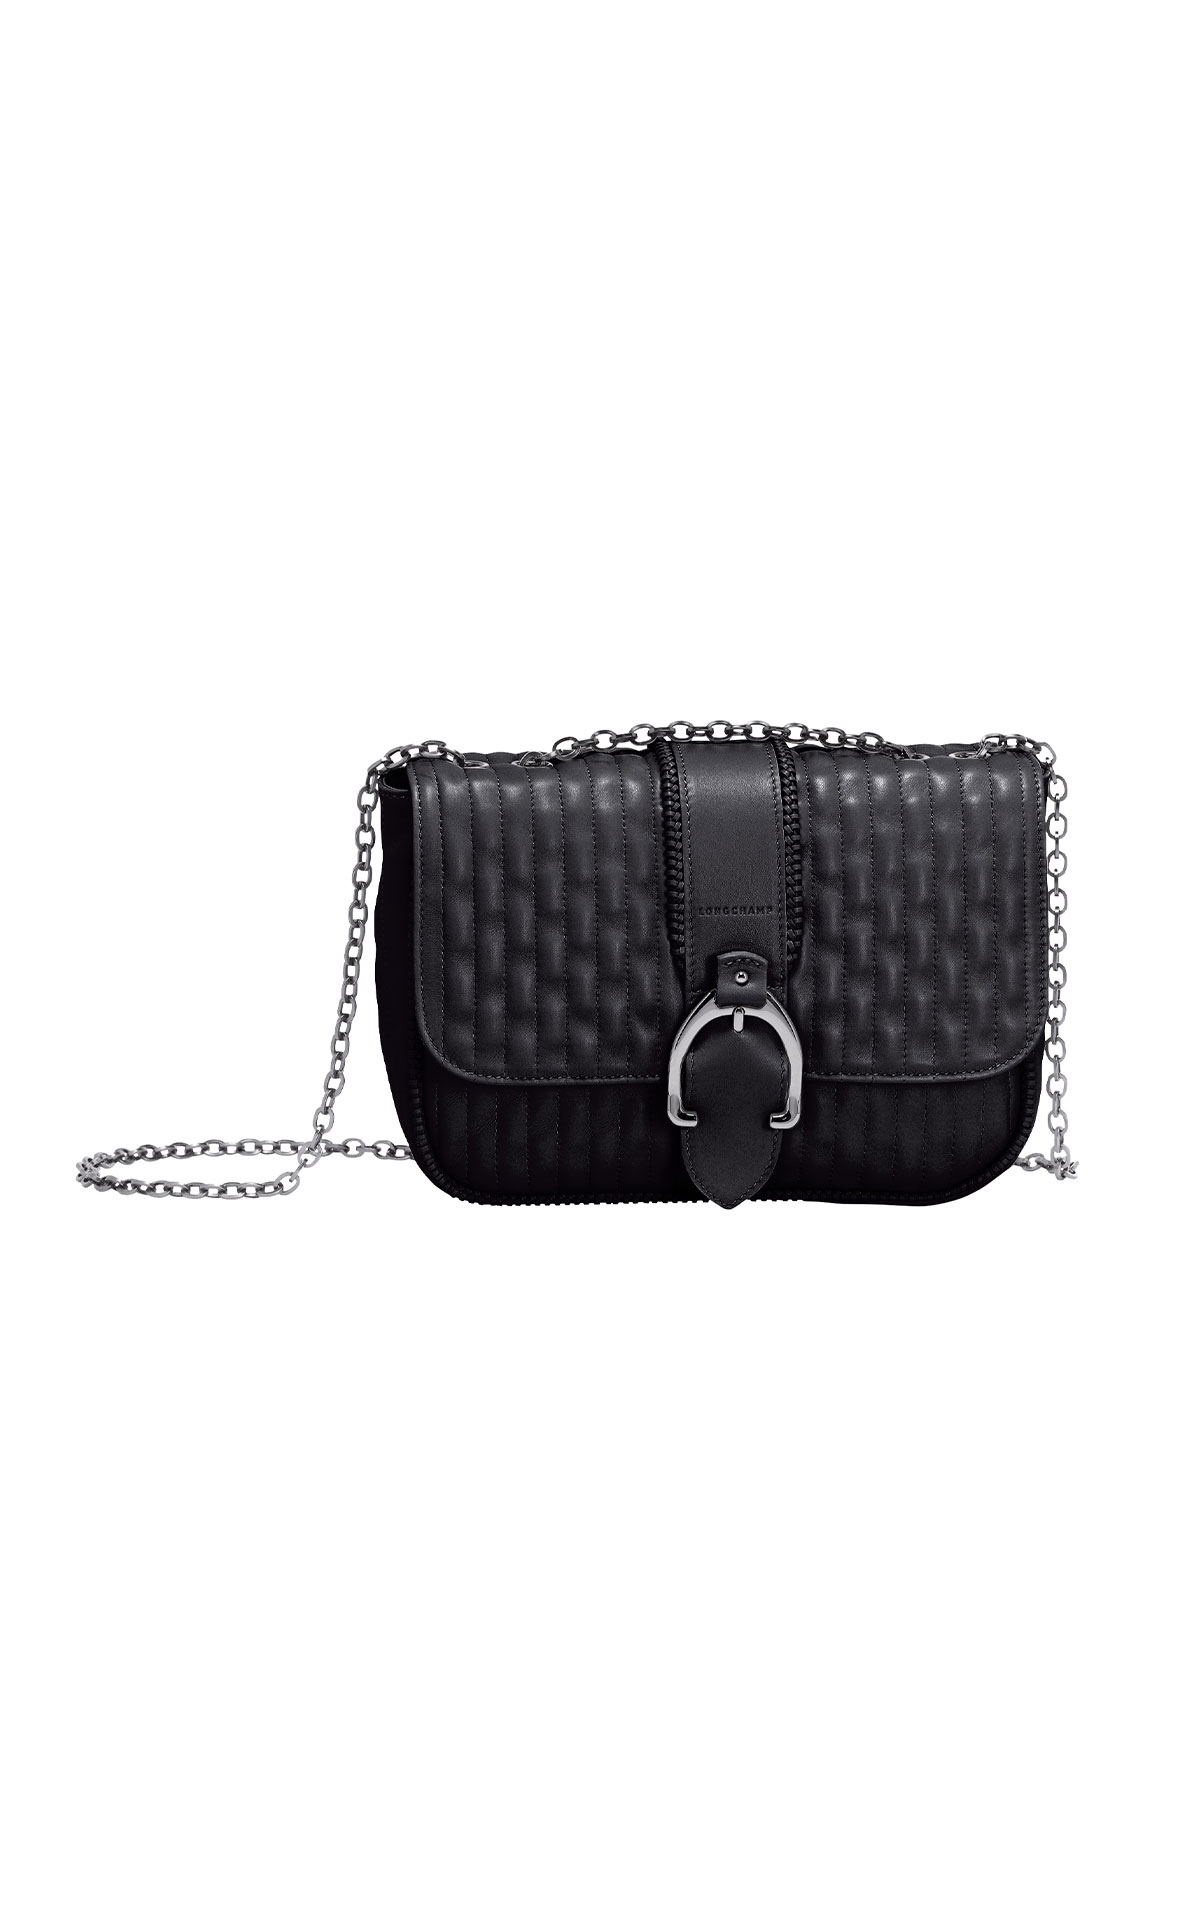 Longchamp Amazone matelass black handbag with chain shoulder strap from Bicester Village